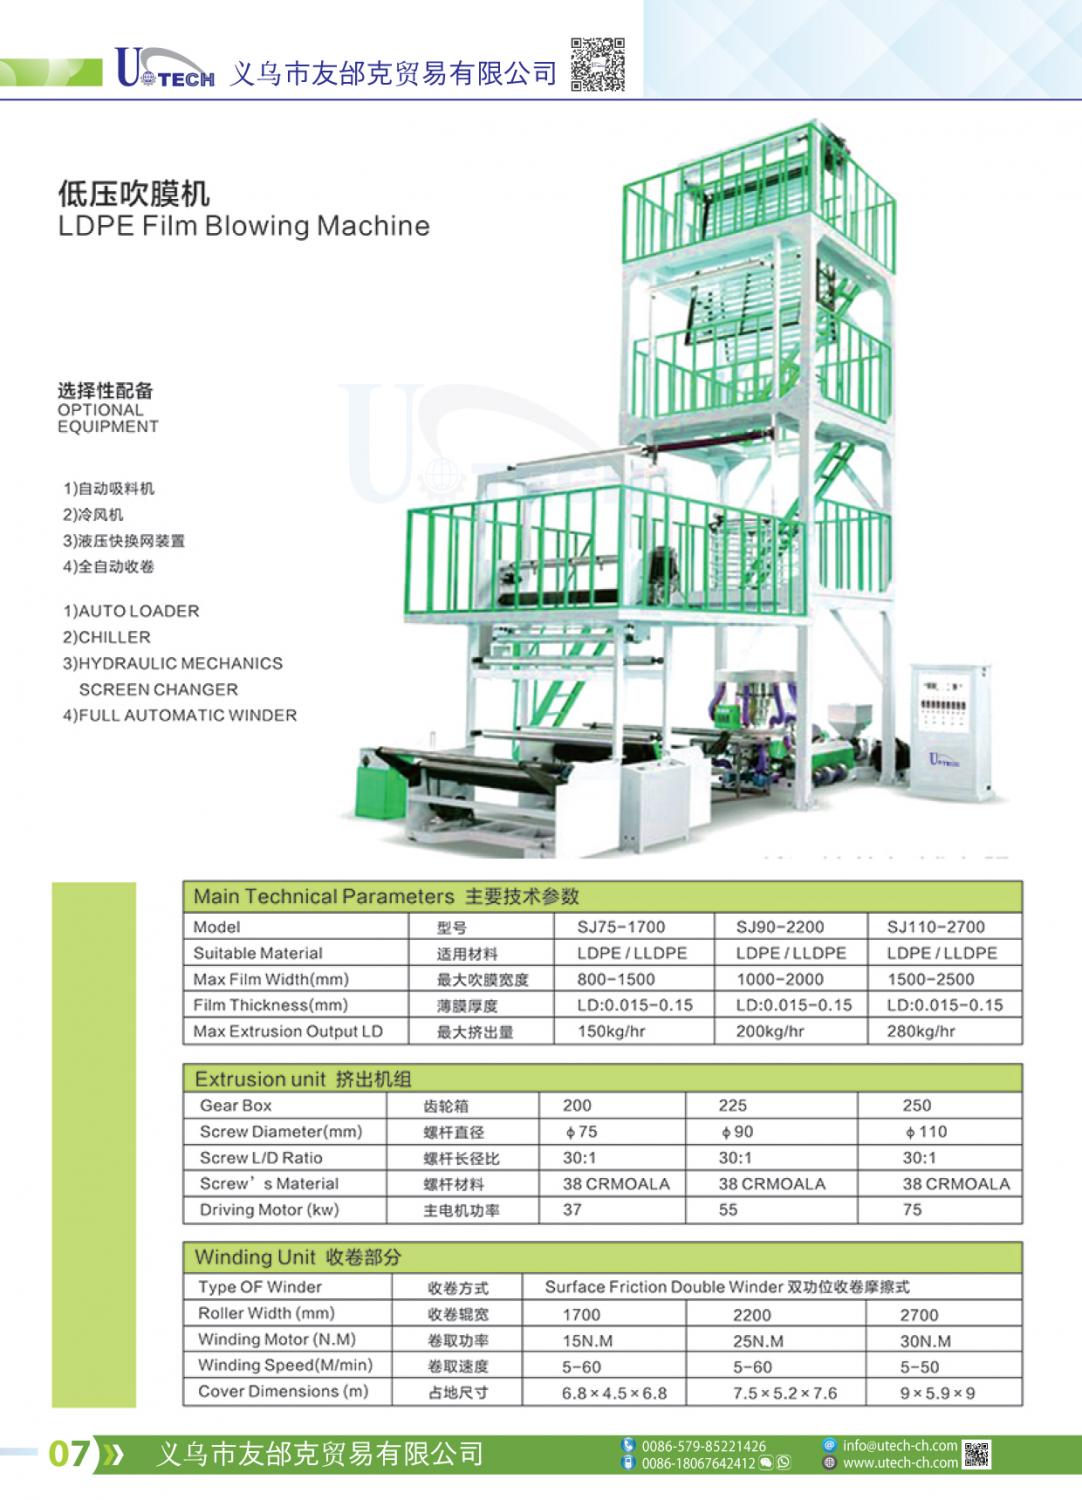 LDPE Film Blowing Machine